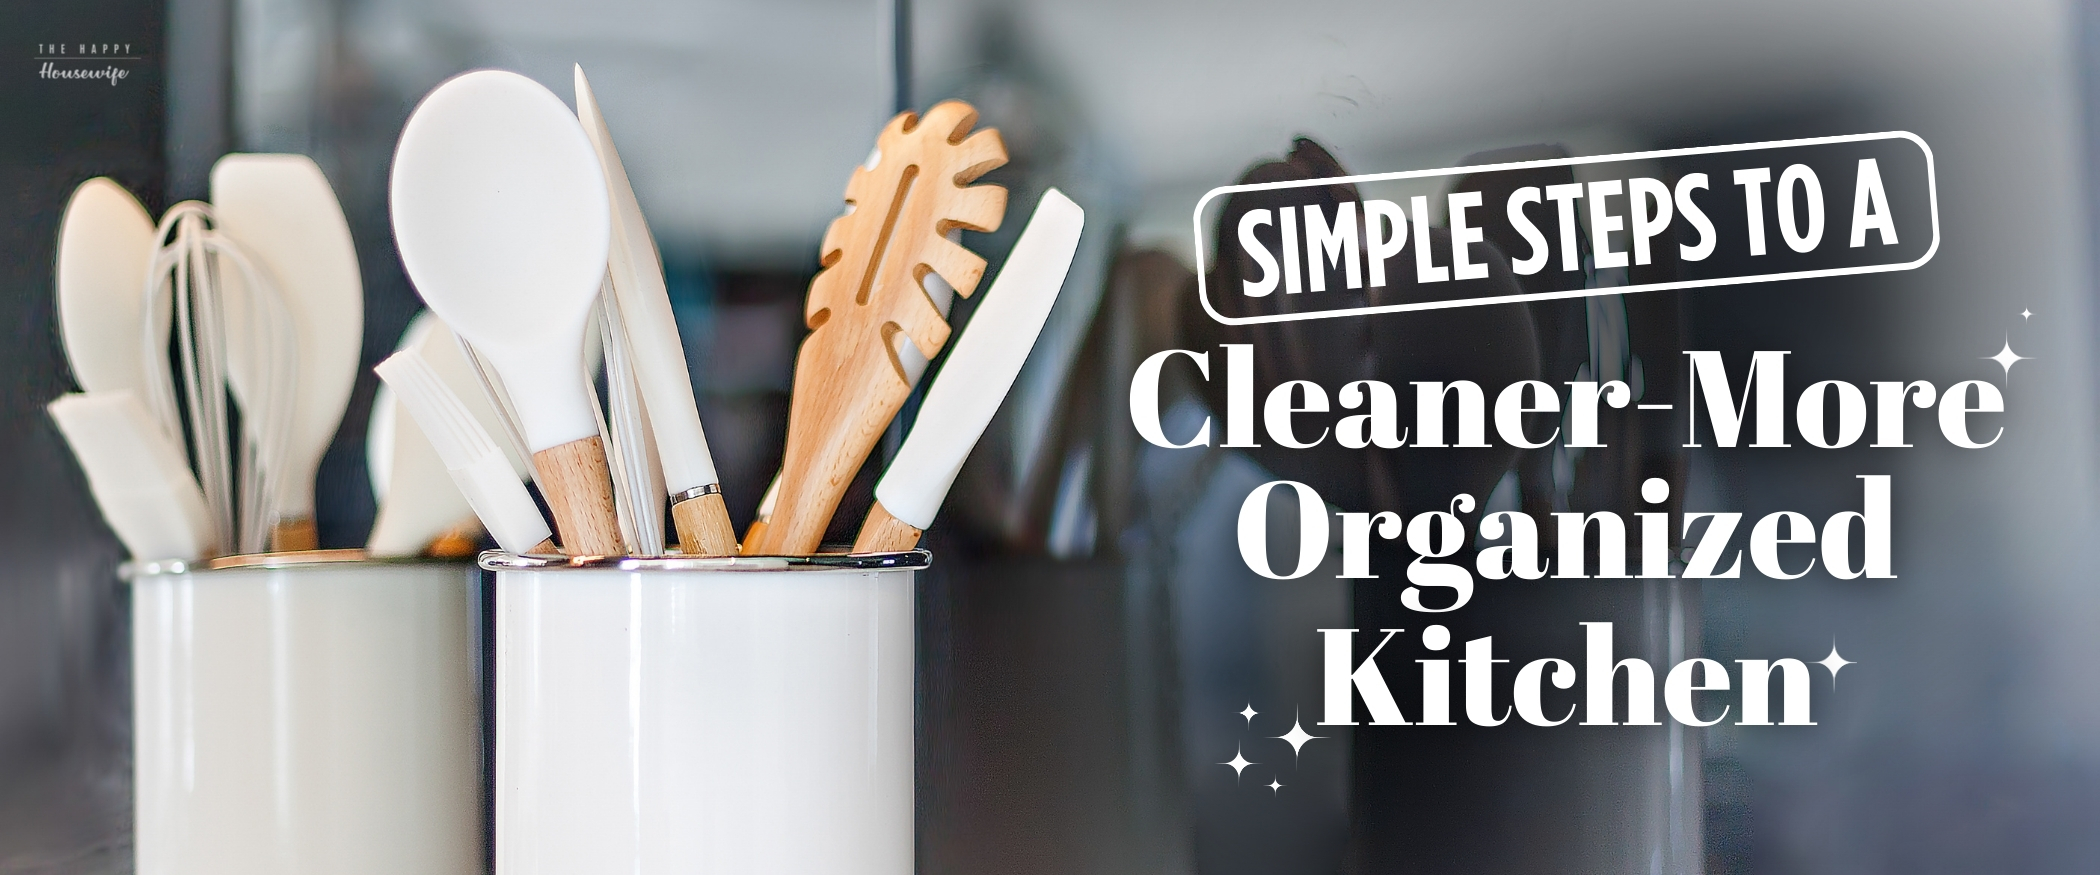 cleaner more organized kitchen